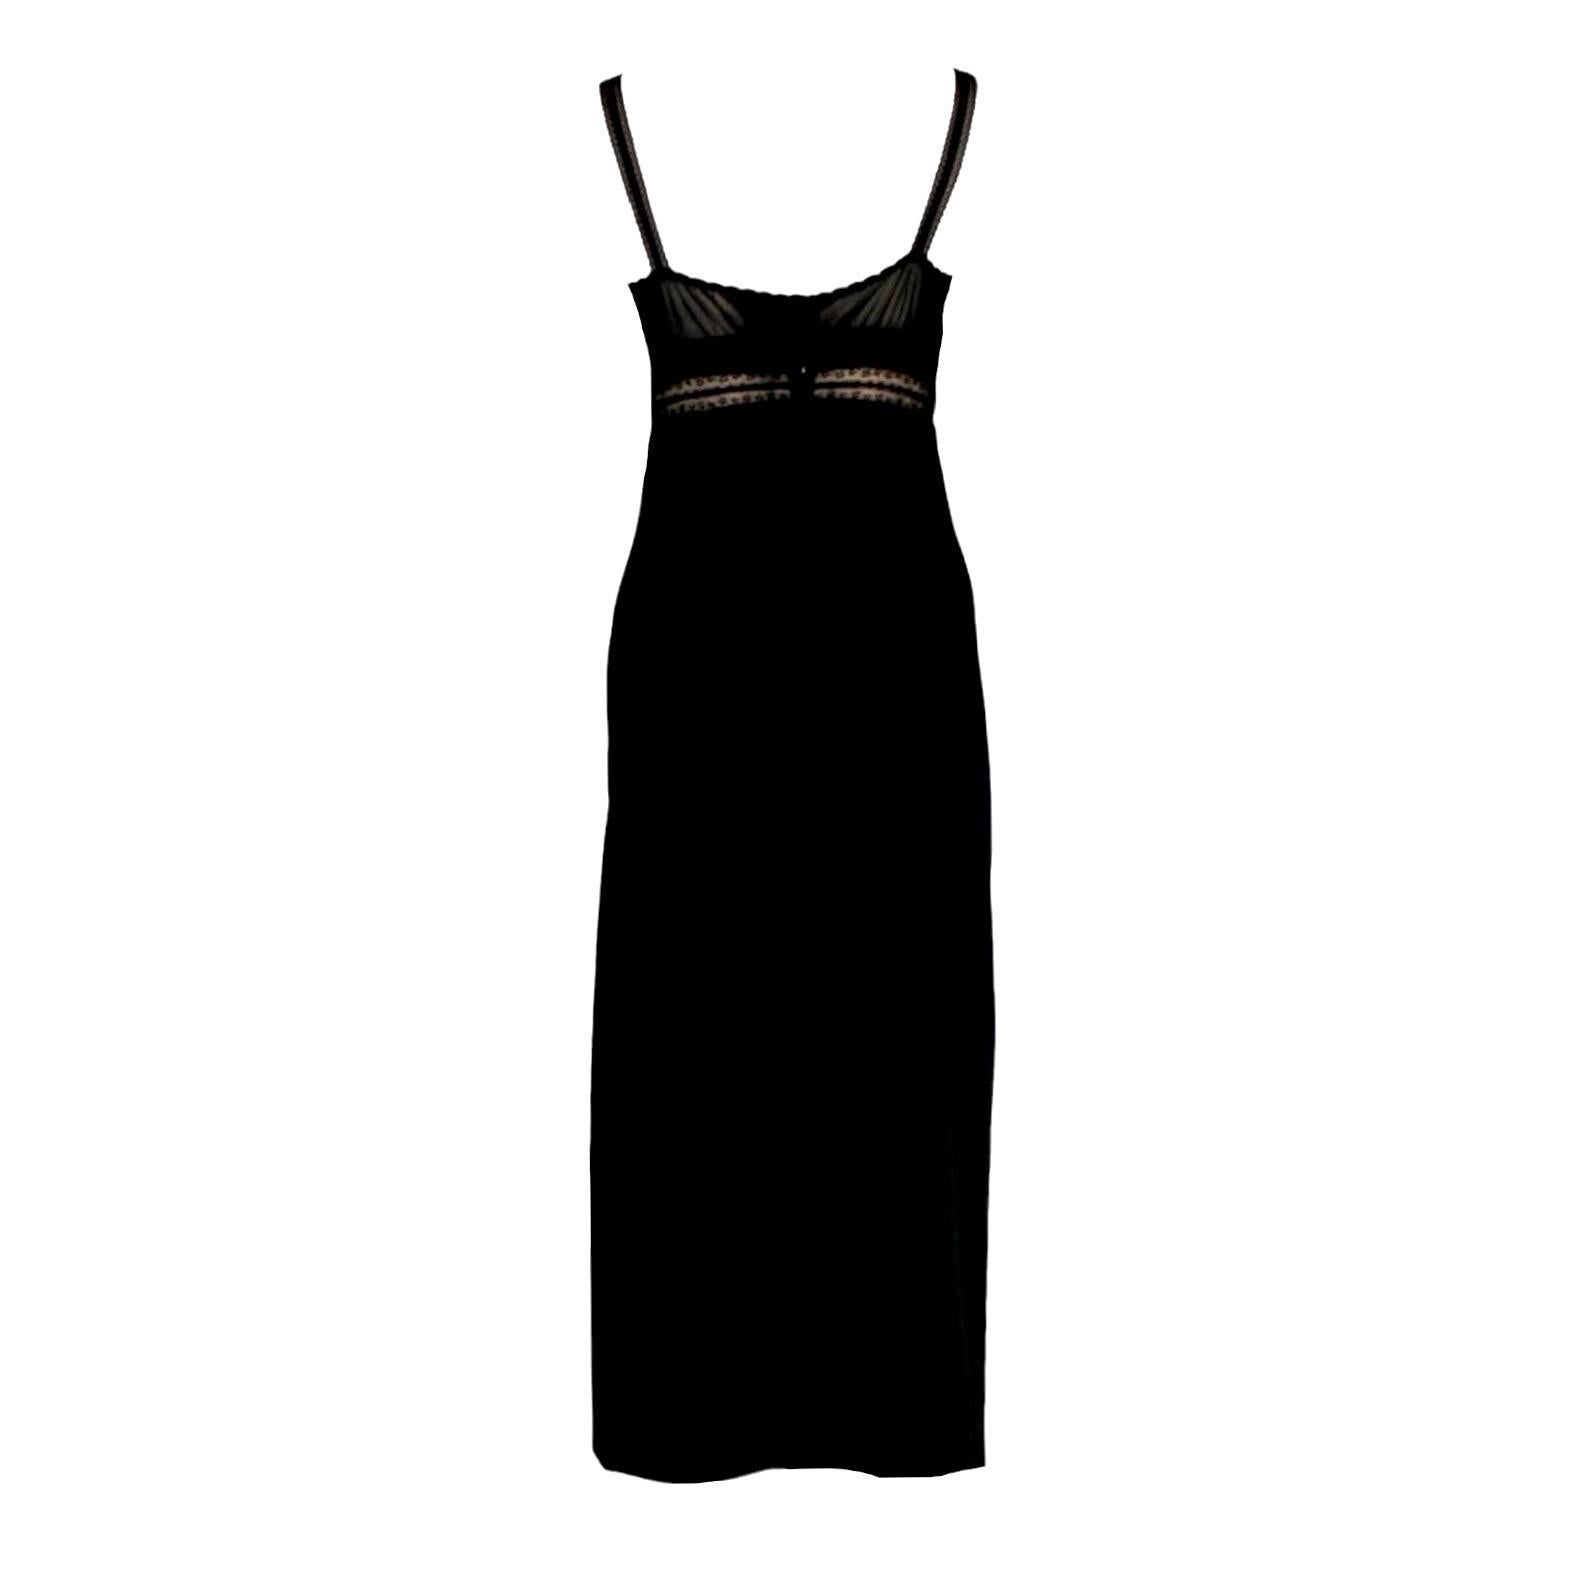 UNWORN Dolce & Gabbana 1997 Black Corset Drawstring Midi Dress Gown 42 In Good Condition For Sale In Switzerland, CH